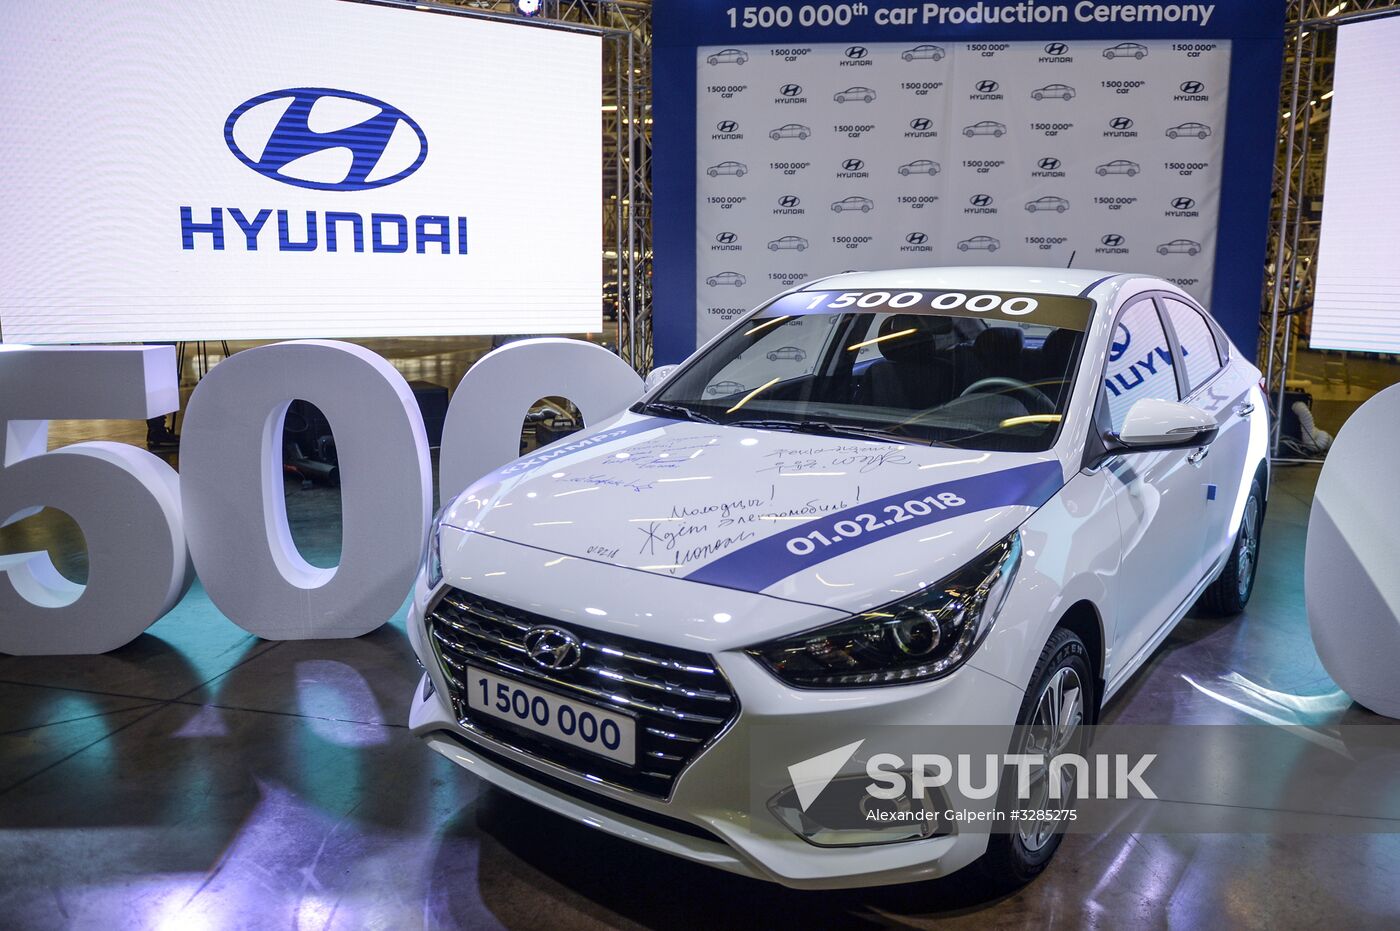 Hyundai Motor plant in St. Petersburg celebrates producing 1.5 million cars